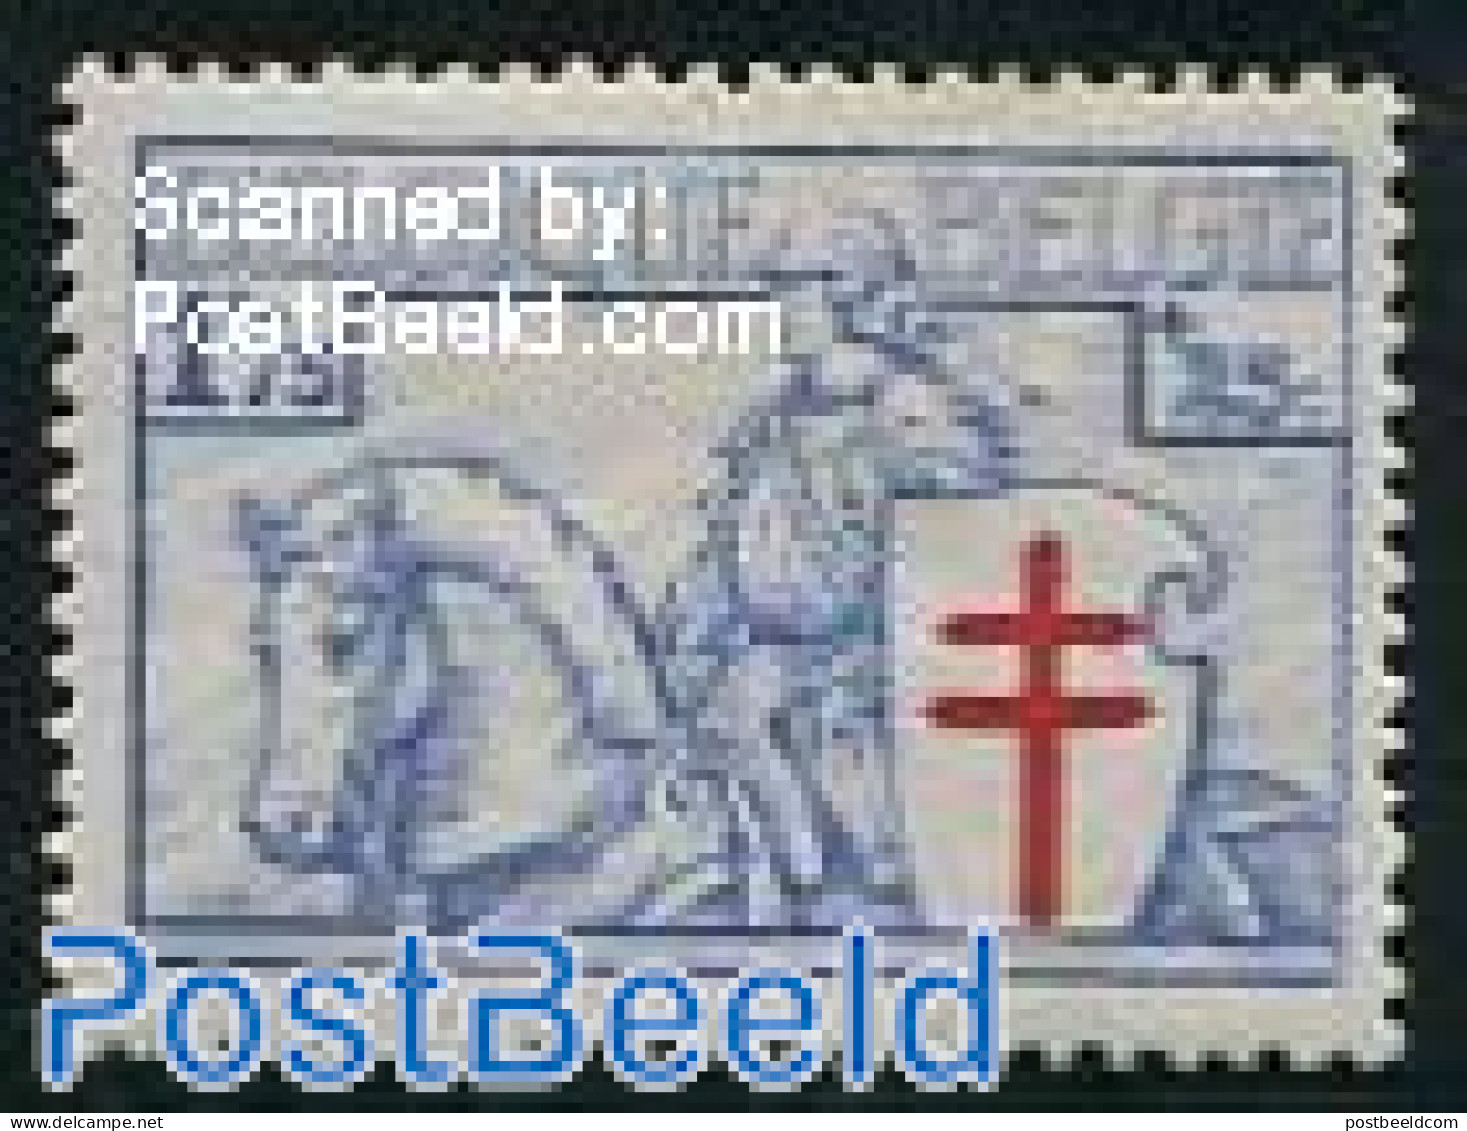 Belgium 1934 1.75Fr, Stamp Out Of Set, Unused (hinged), Health - Nature - Ungebraucht